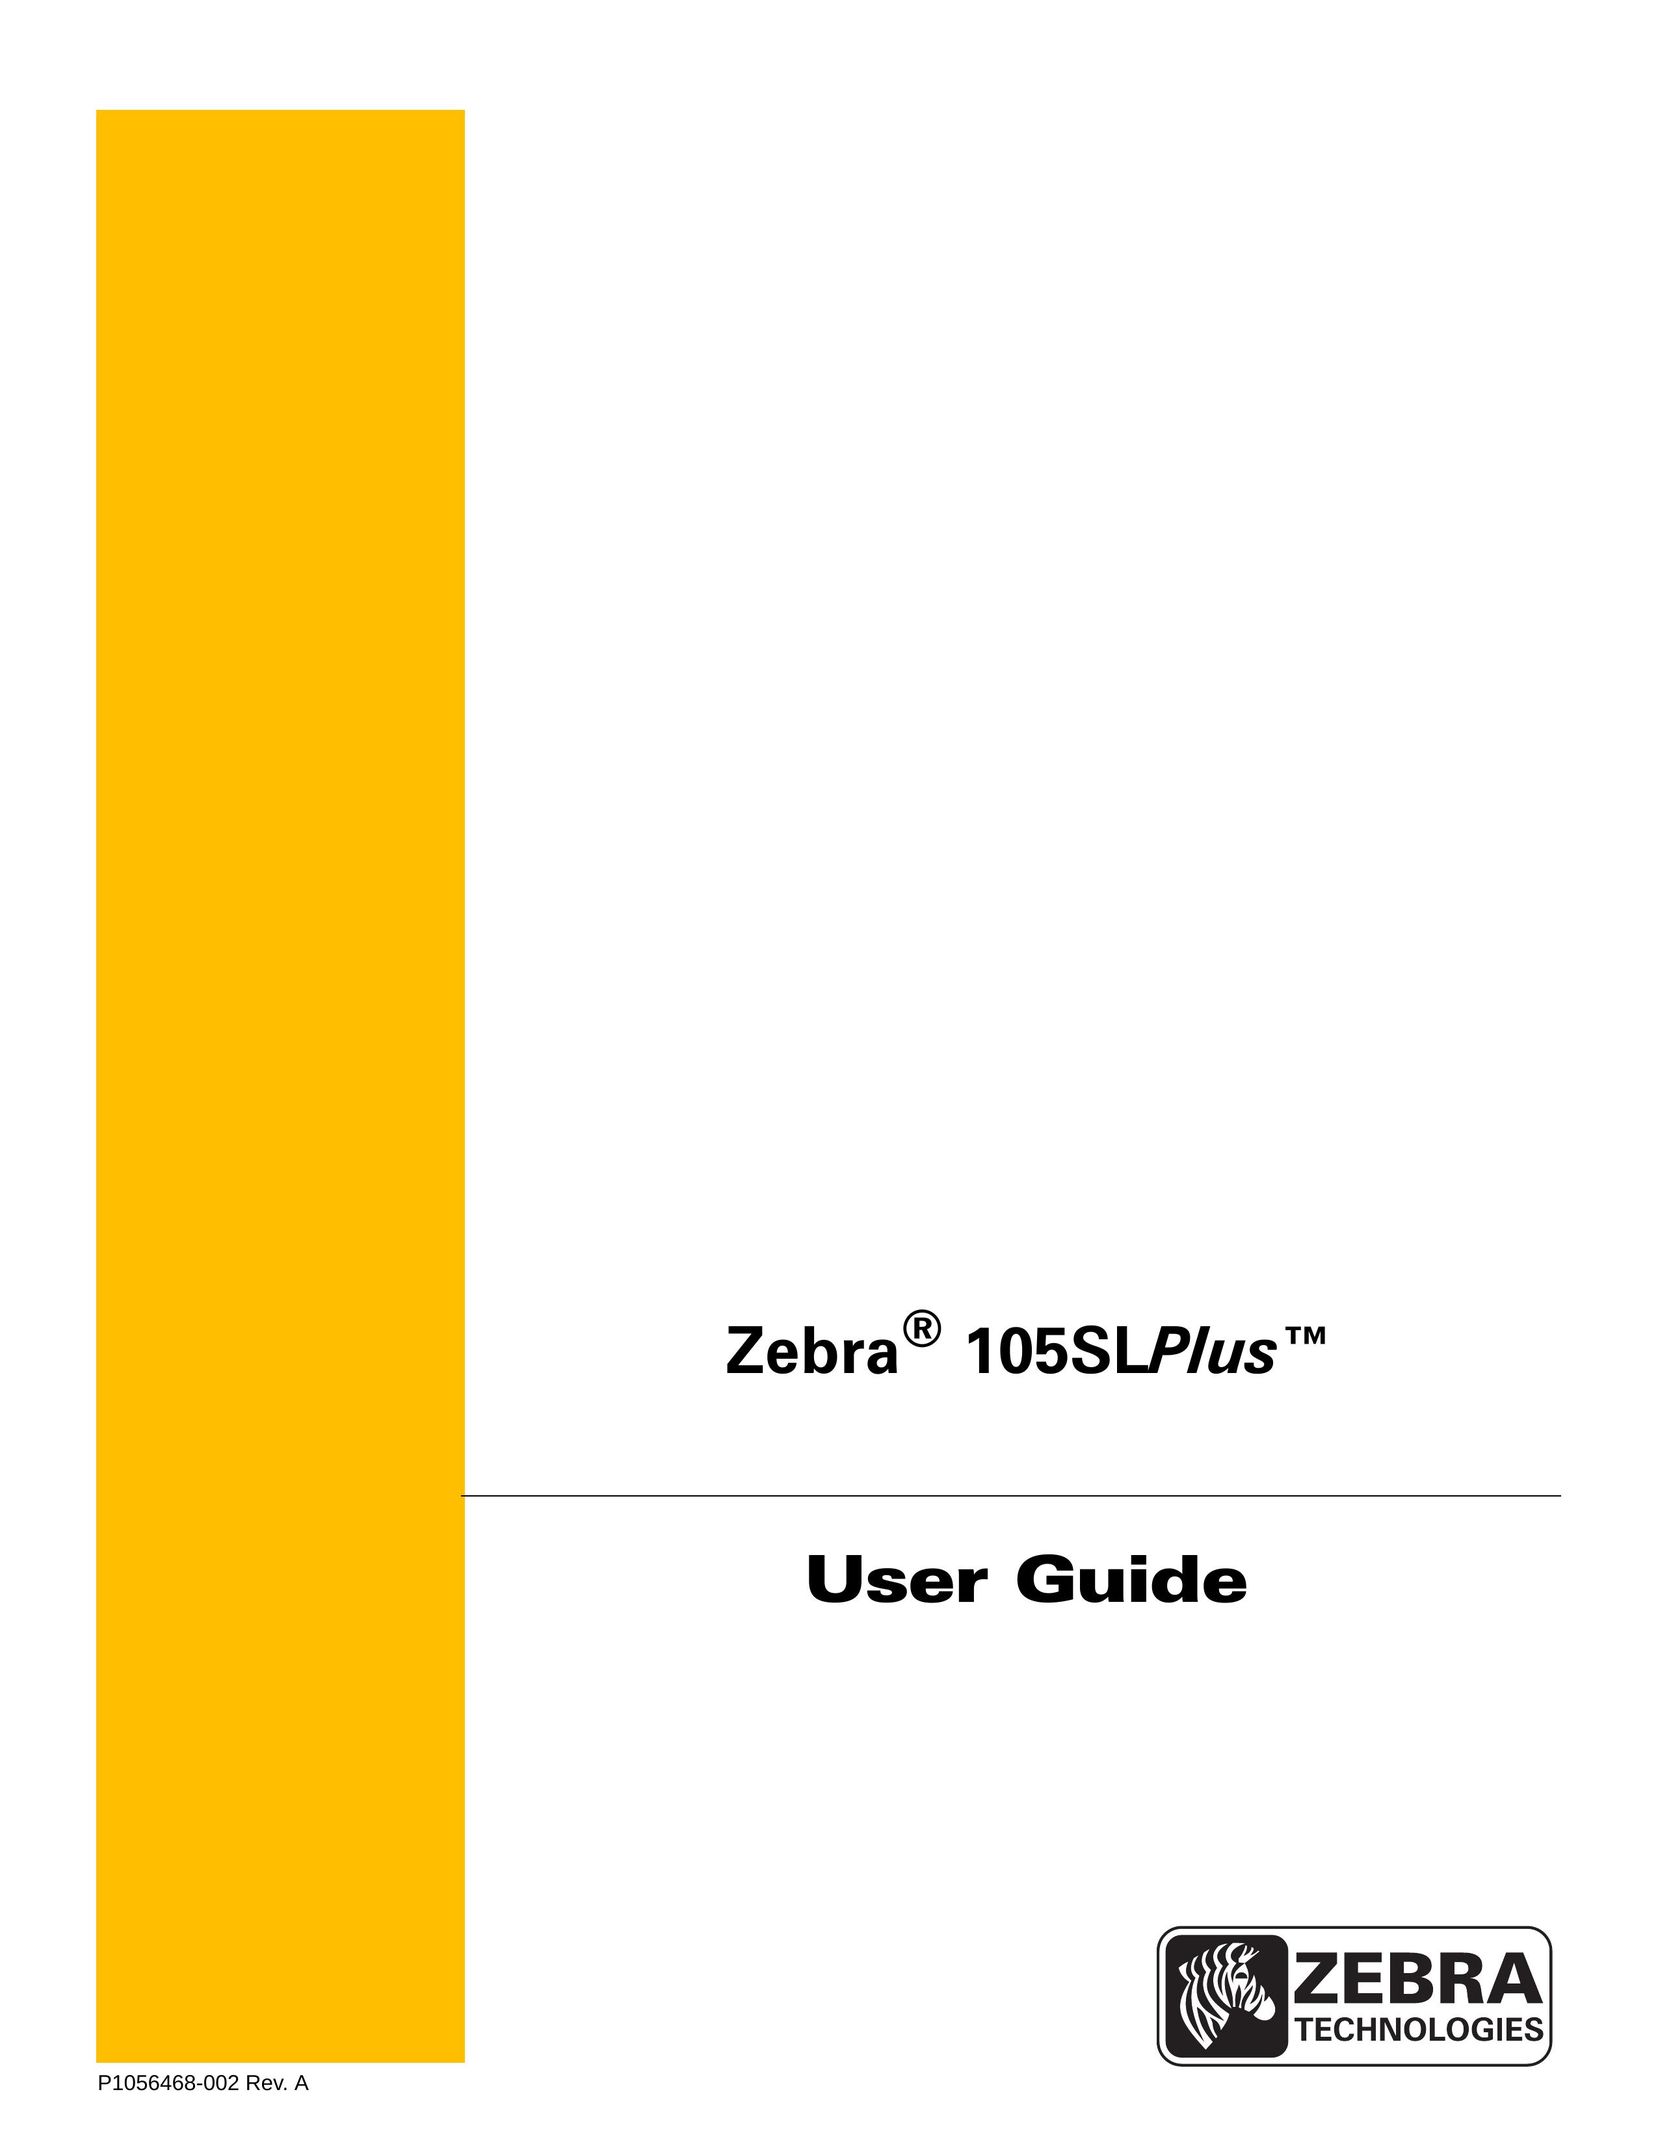 Zebra Technologies 105SL Plus Printer User Manual